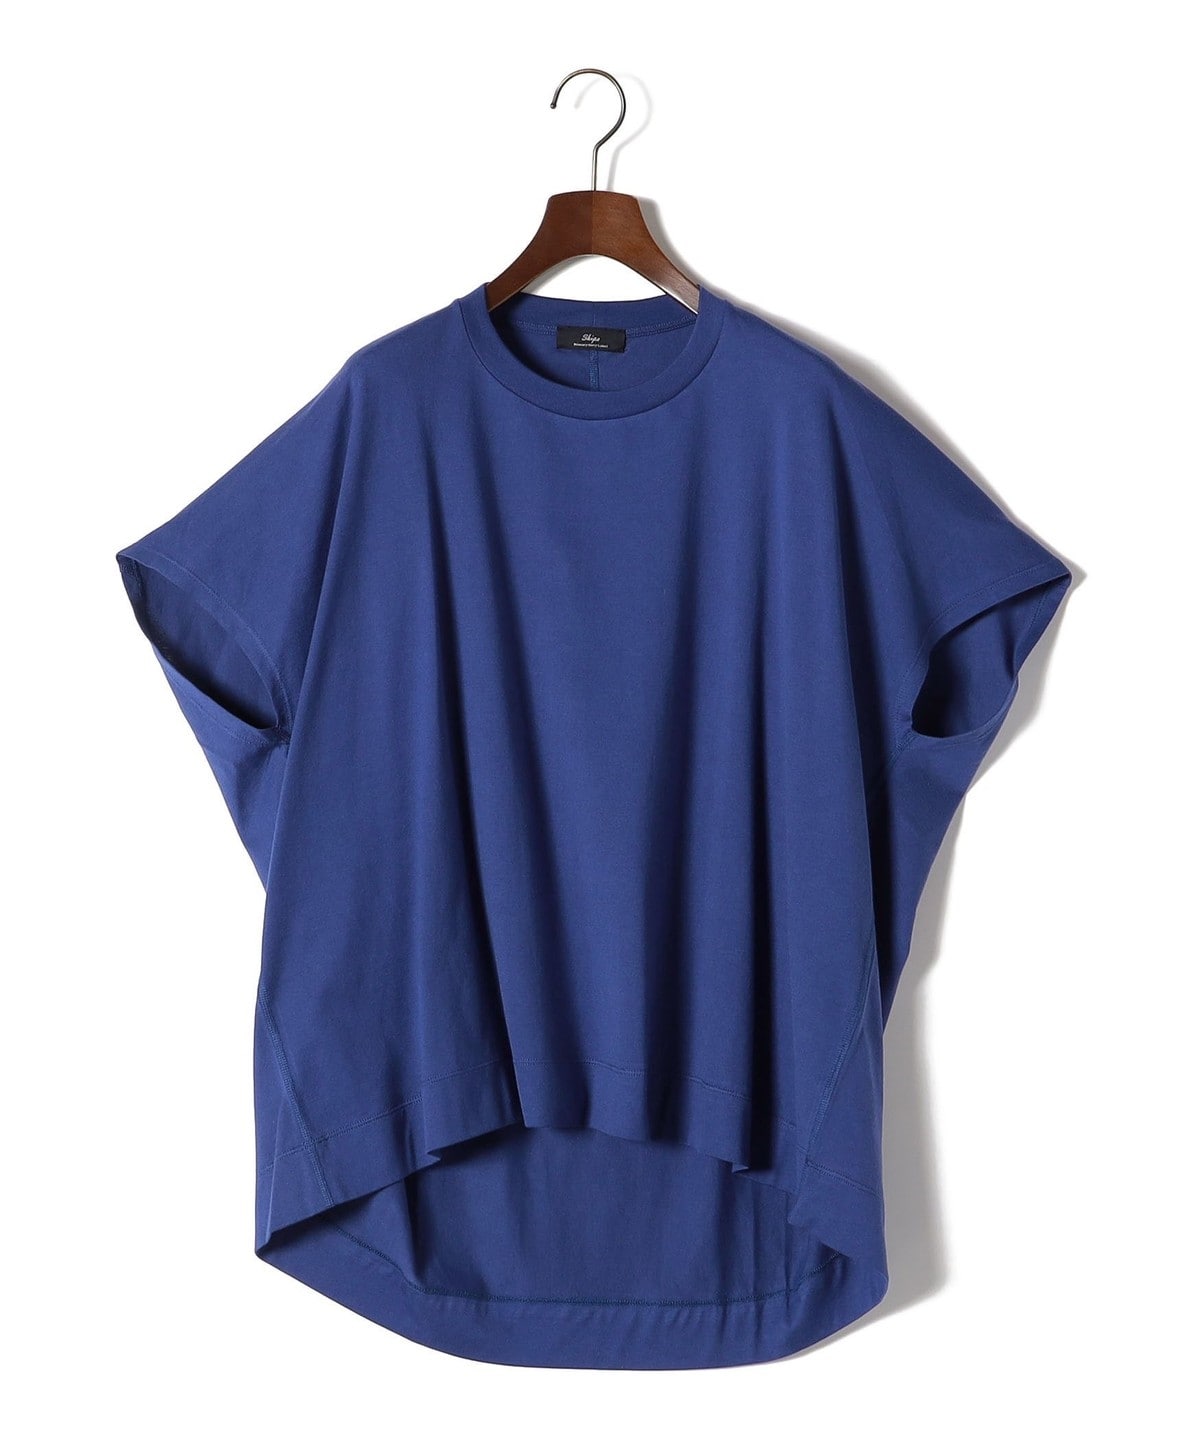 Primary NavyLabel:BIG Tシャツ ブルー